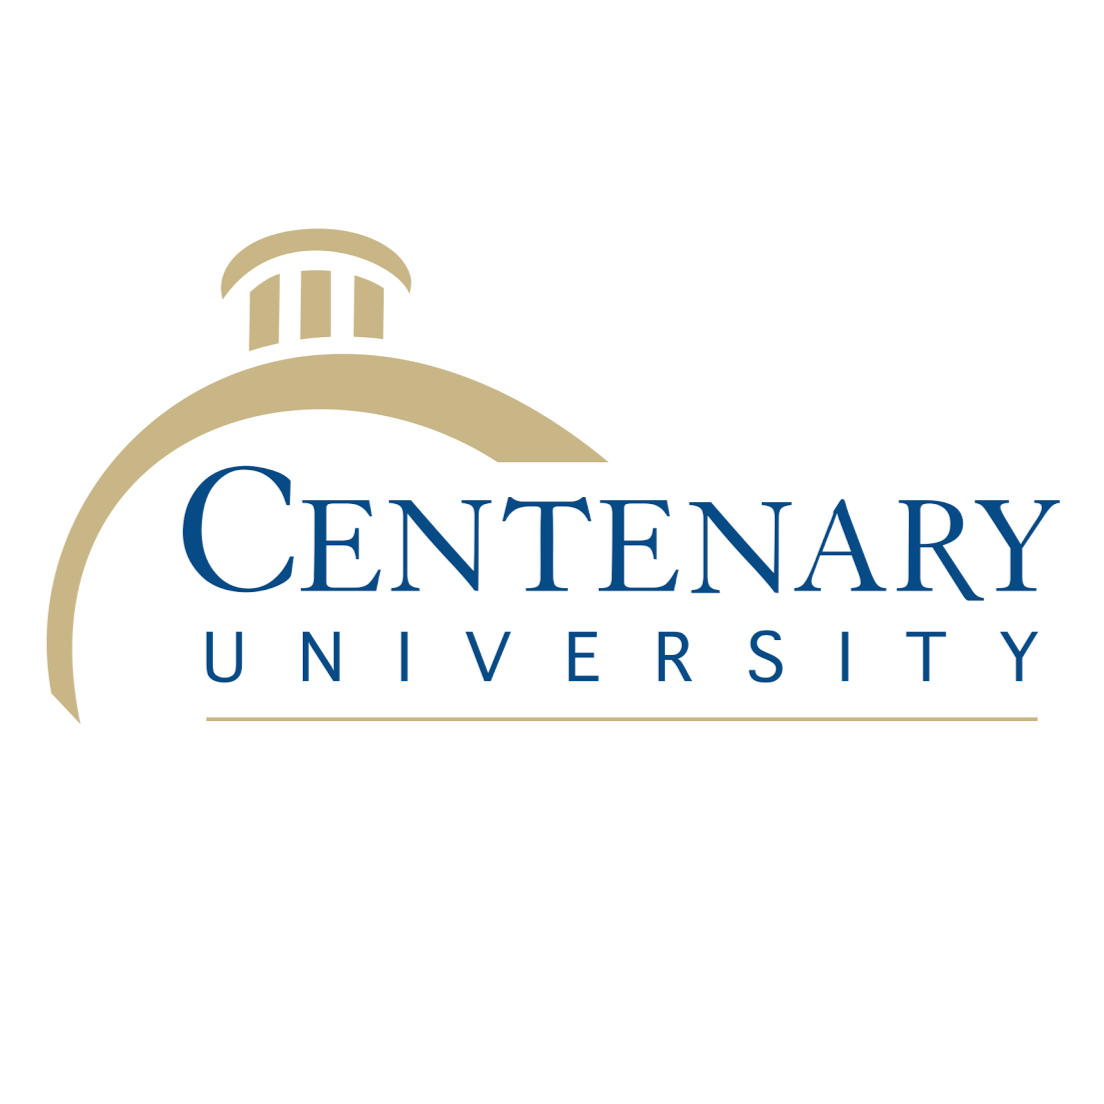 Century university